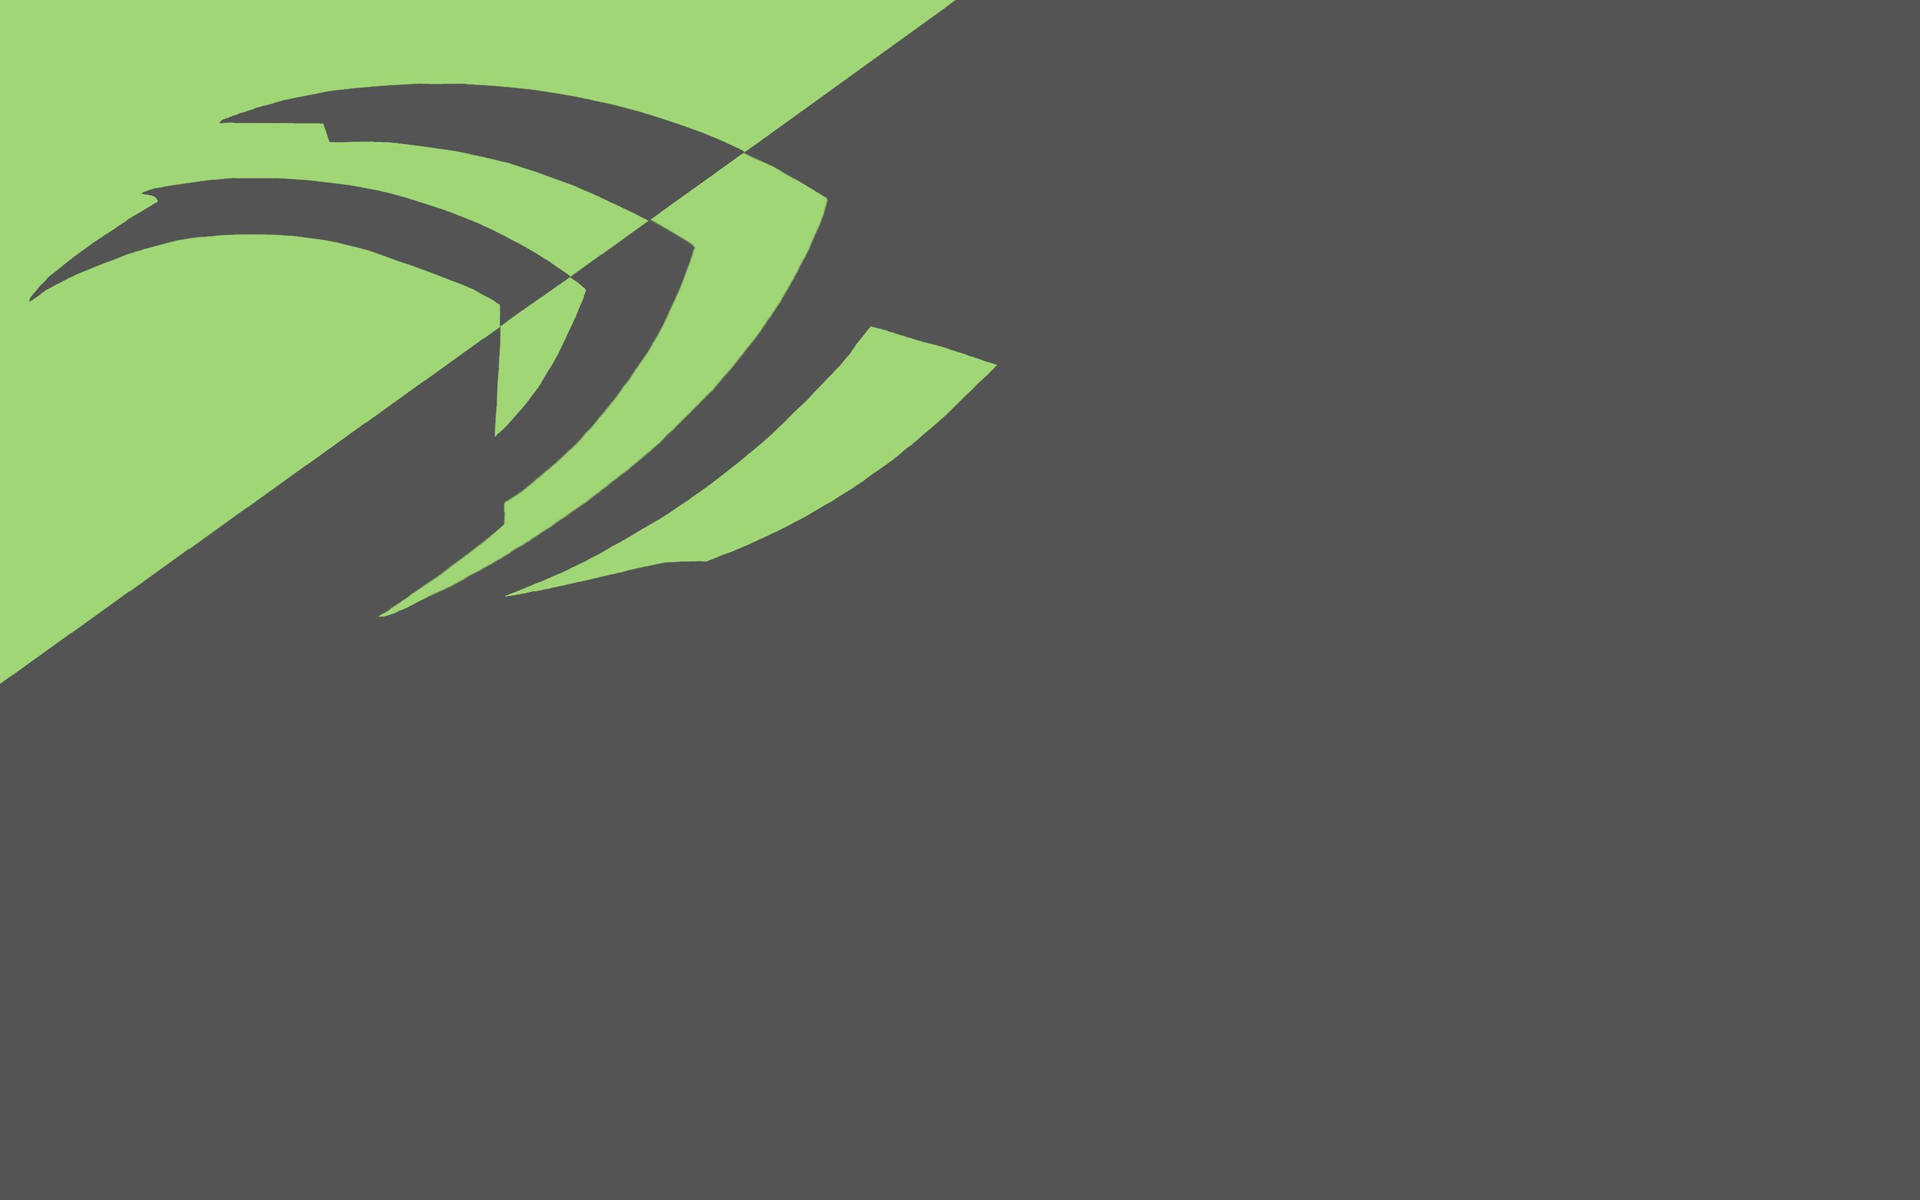 Minimalistic Nvidia Green And Grey Background